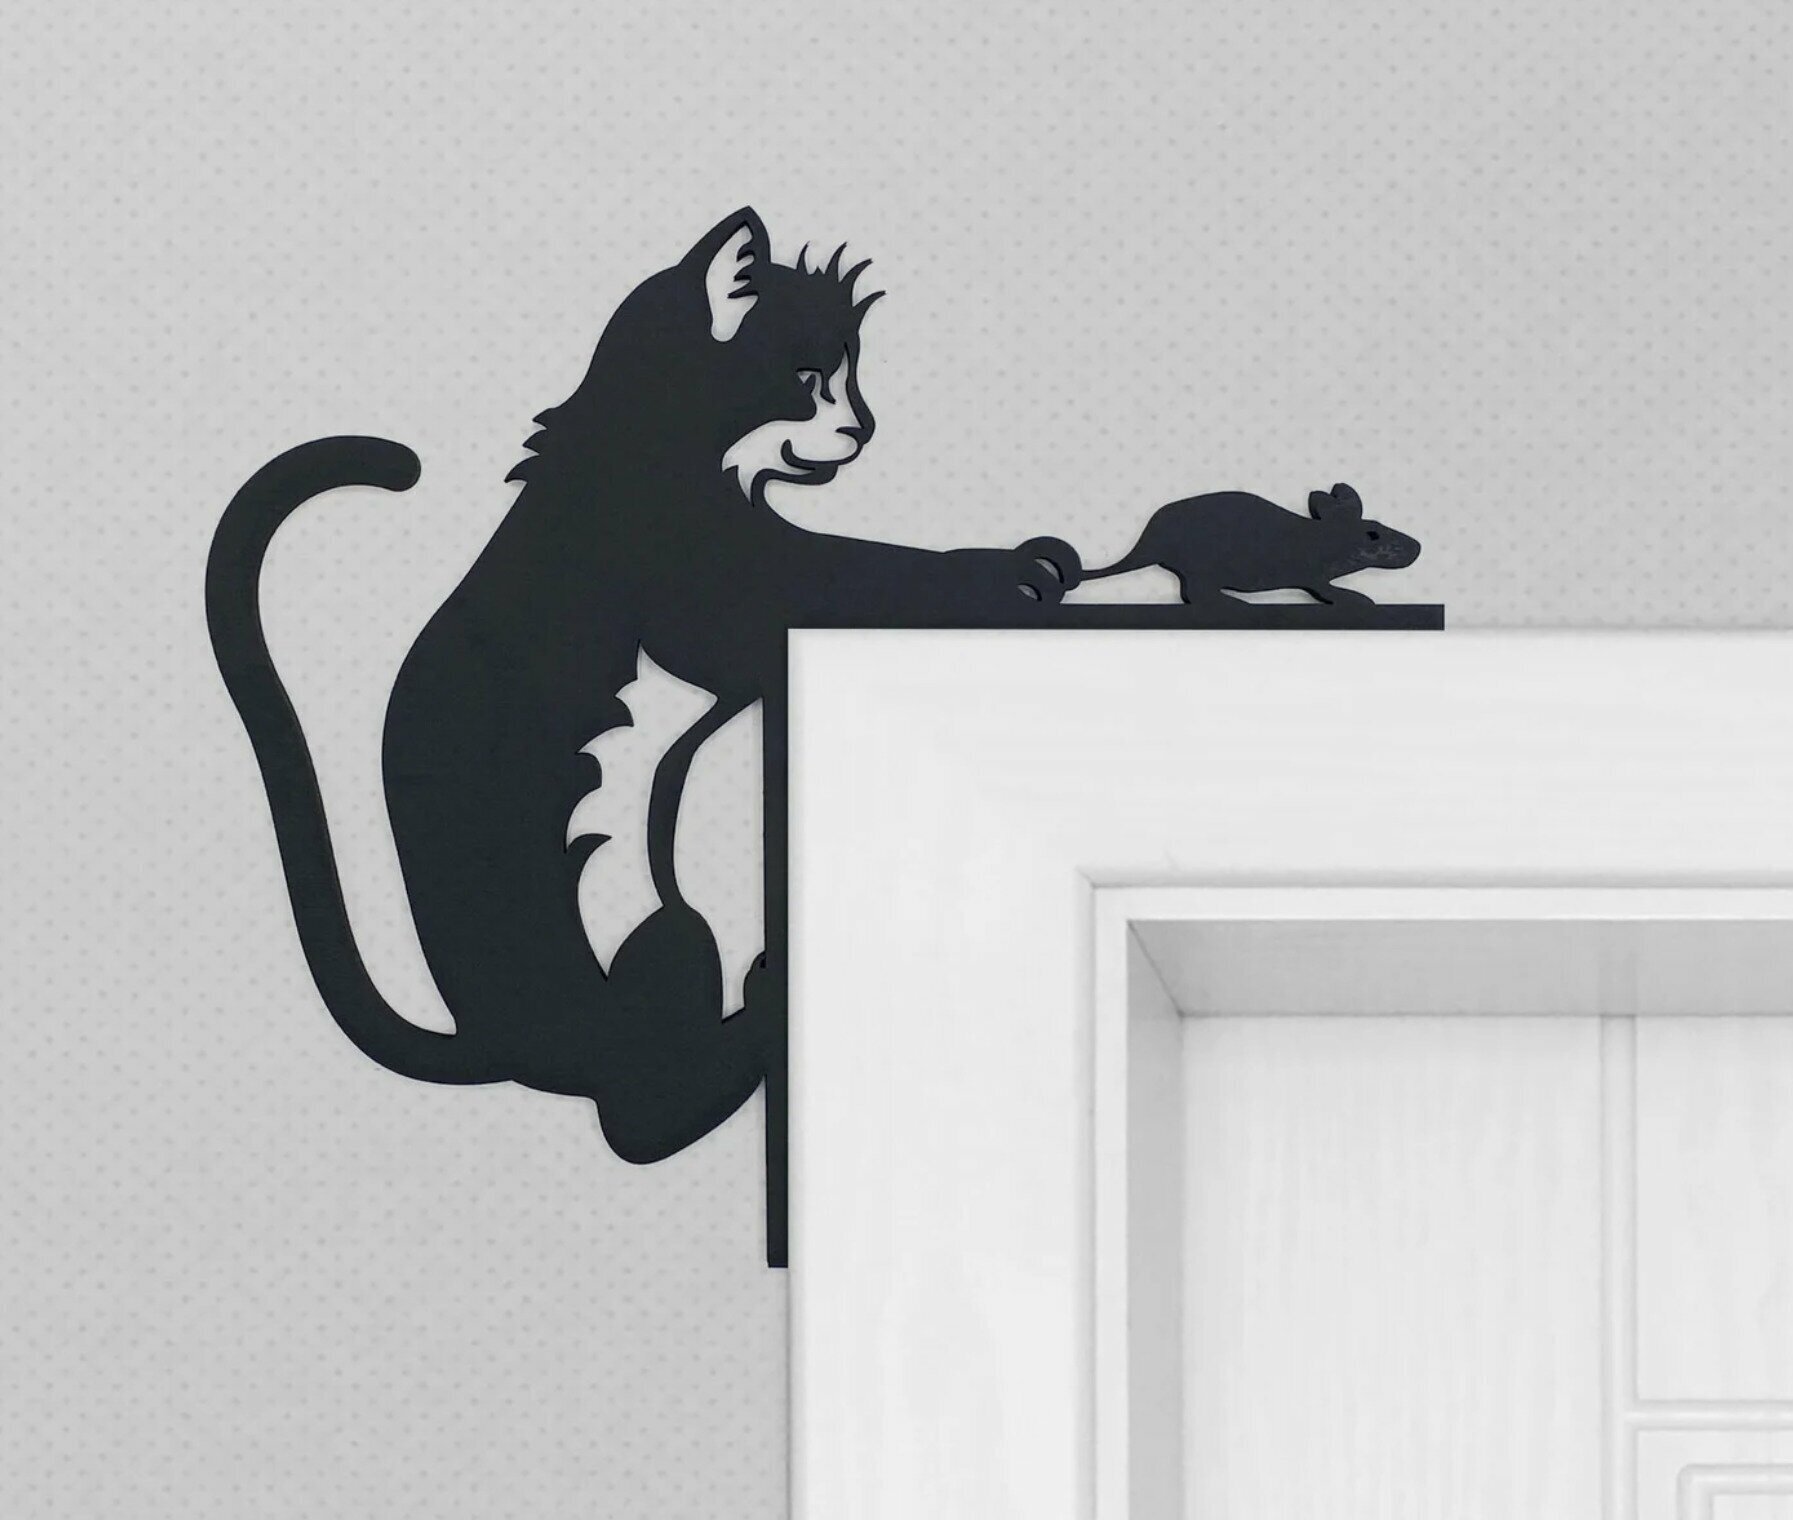 Панно 30х30 см "Кошки мышки" декоративное настенное чёрное, декор на стену, картина